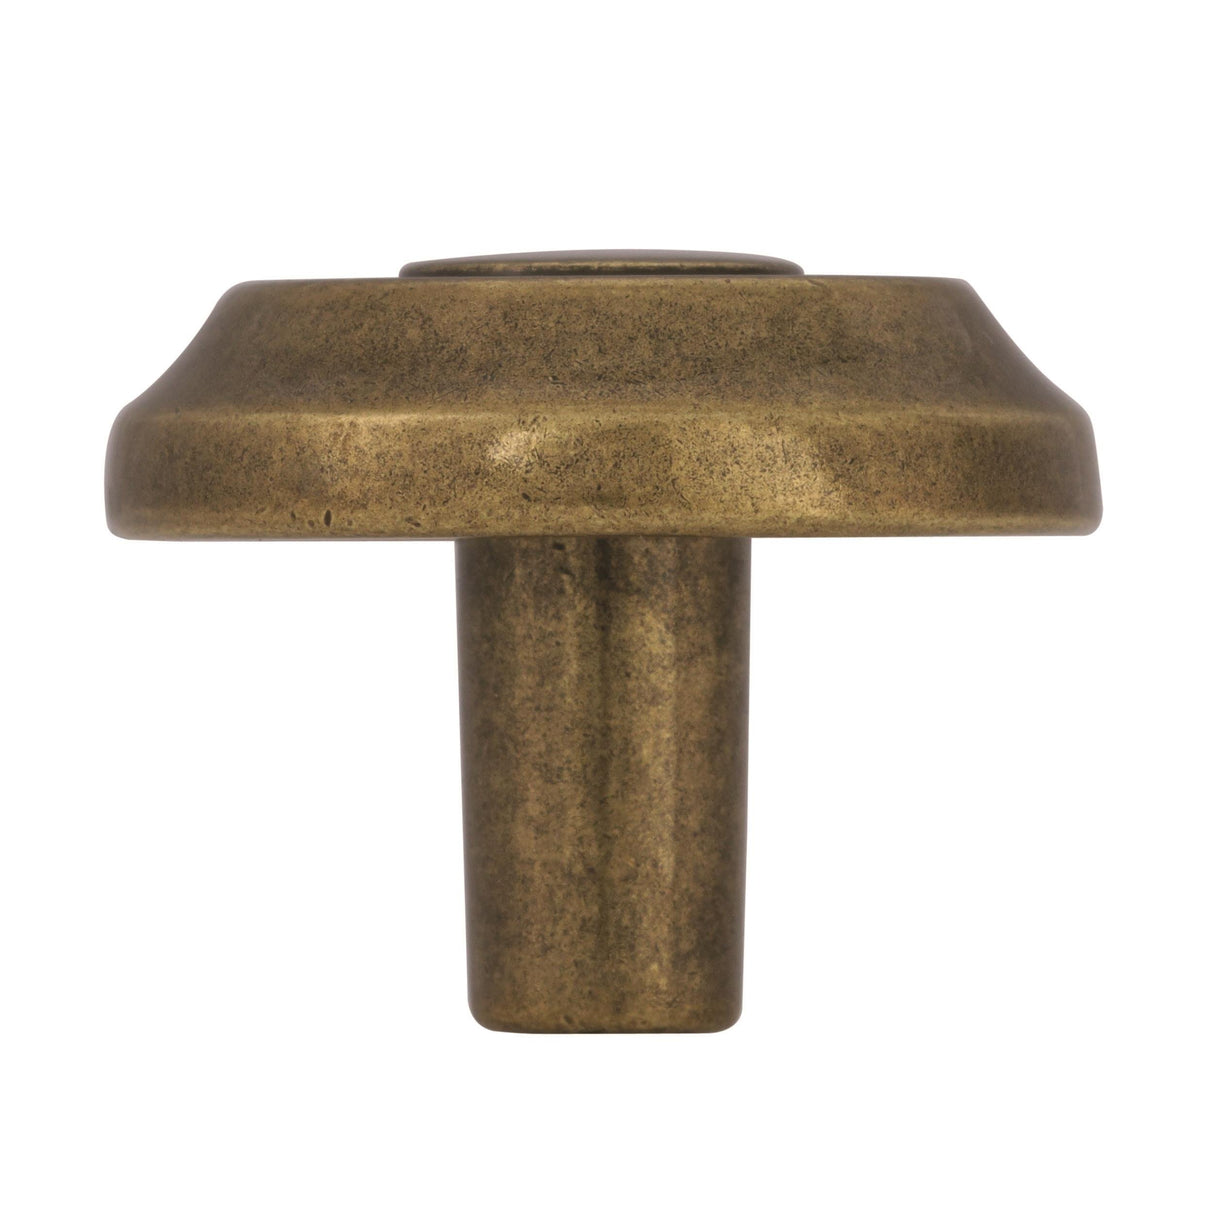 Amerock Cabinet Knob Burnished Brass 1-1/4 inch (32 mm) Diameter Everyday Heritage 1 Pack Drawer Knob Cabinet Hardware